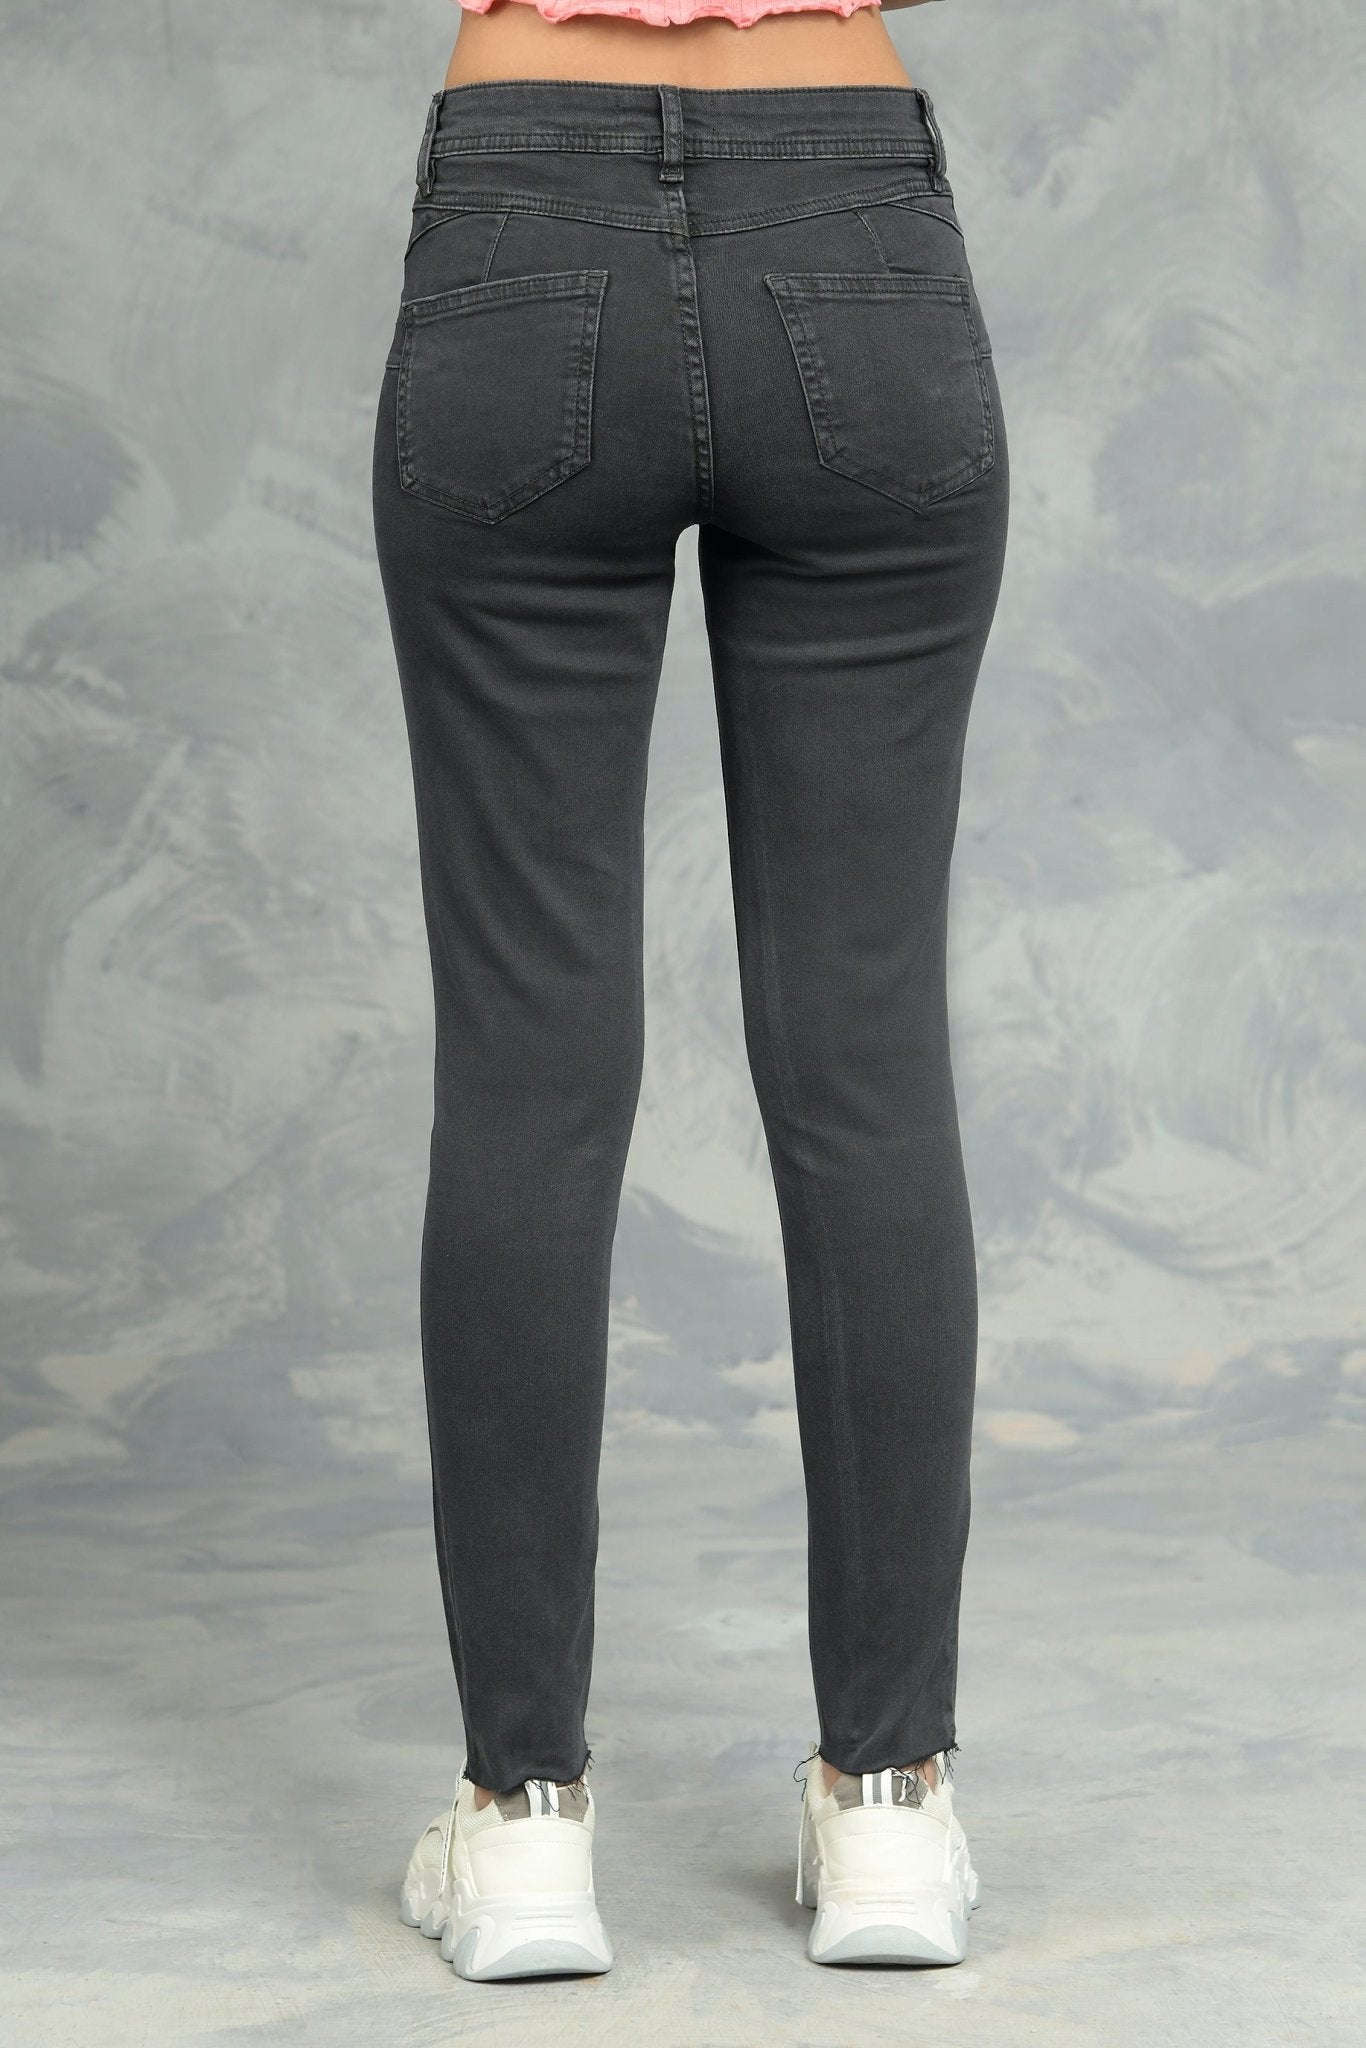 Black Slim Fit Ripped Jeans - Negative Apparel